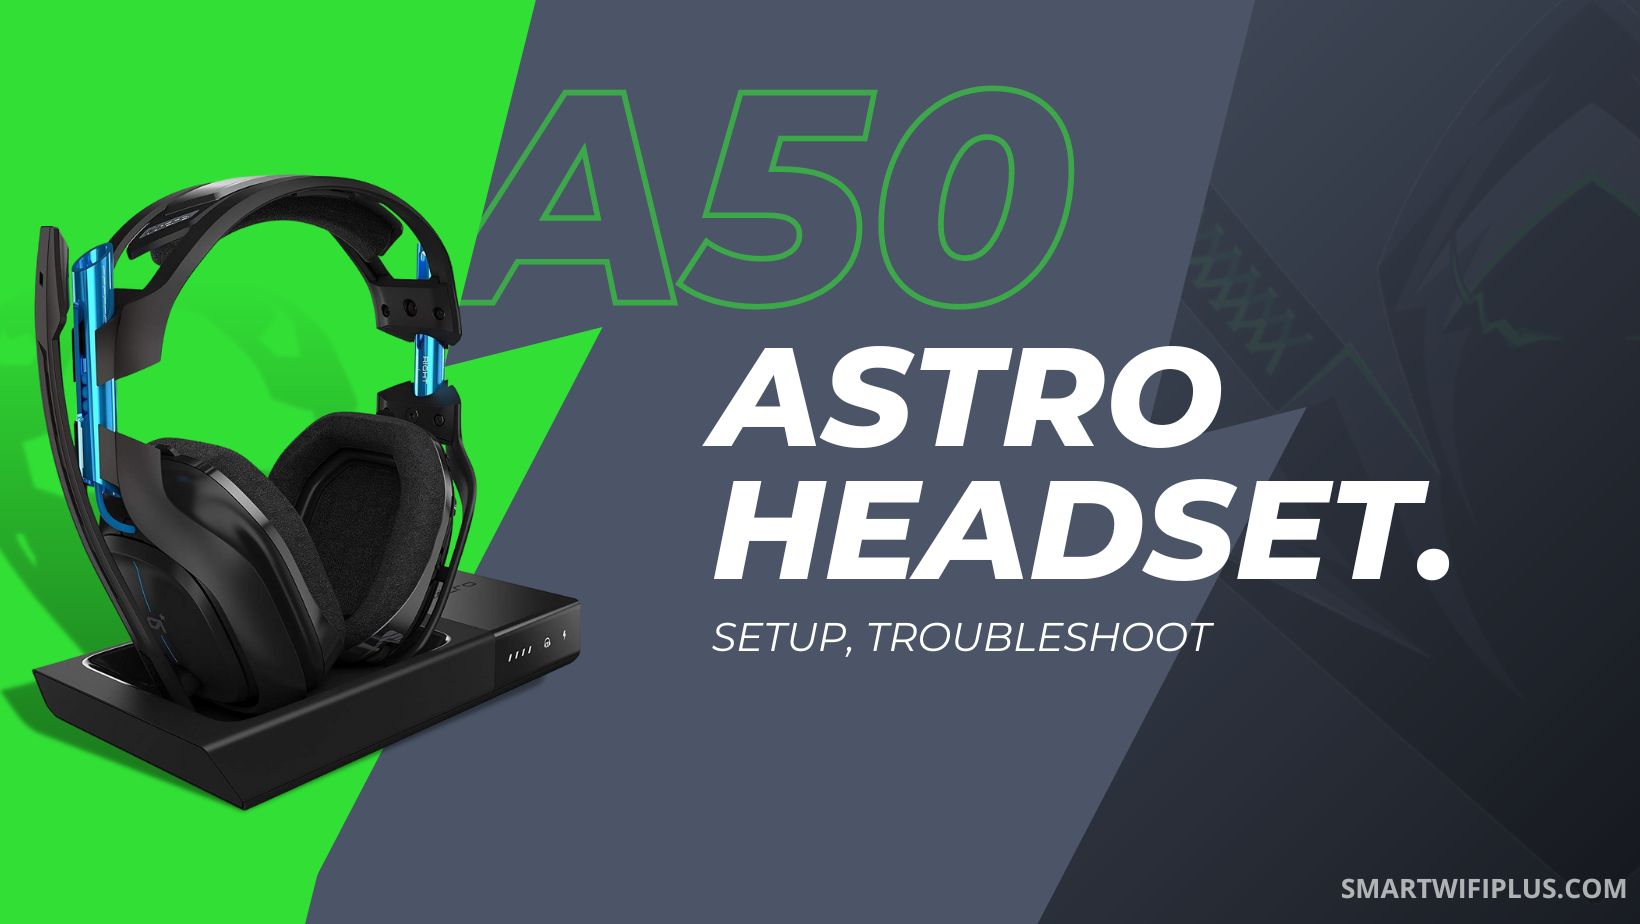 Astro A50 Headset Setup, Troubleshoot